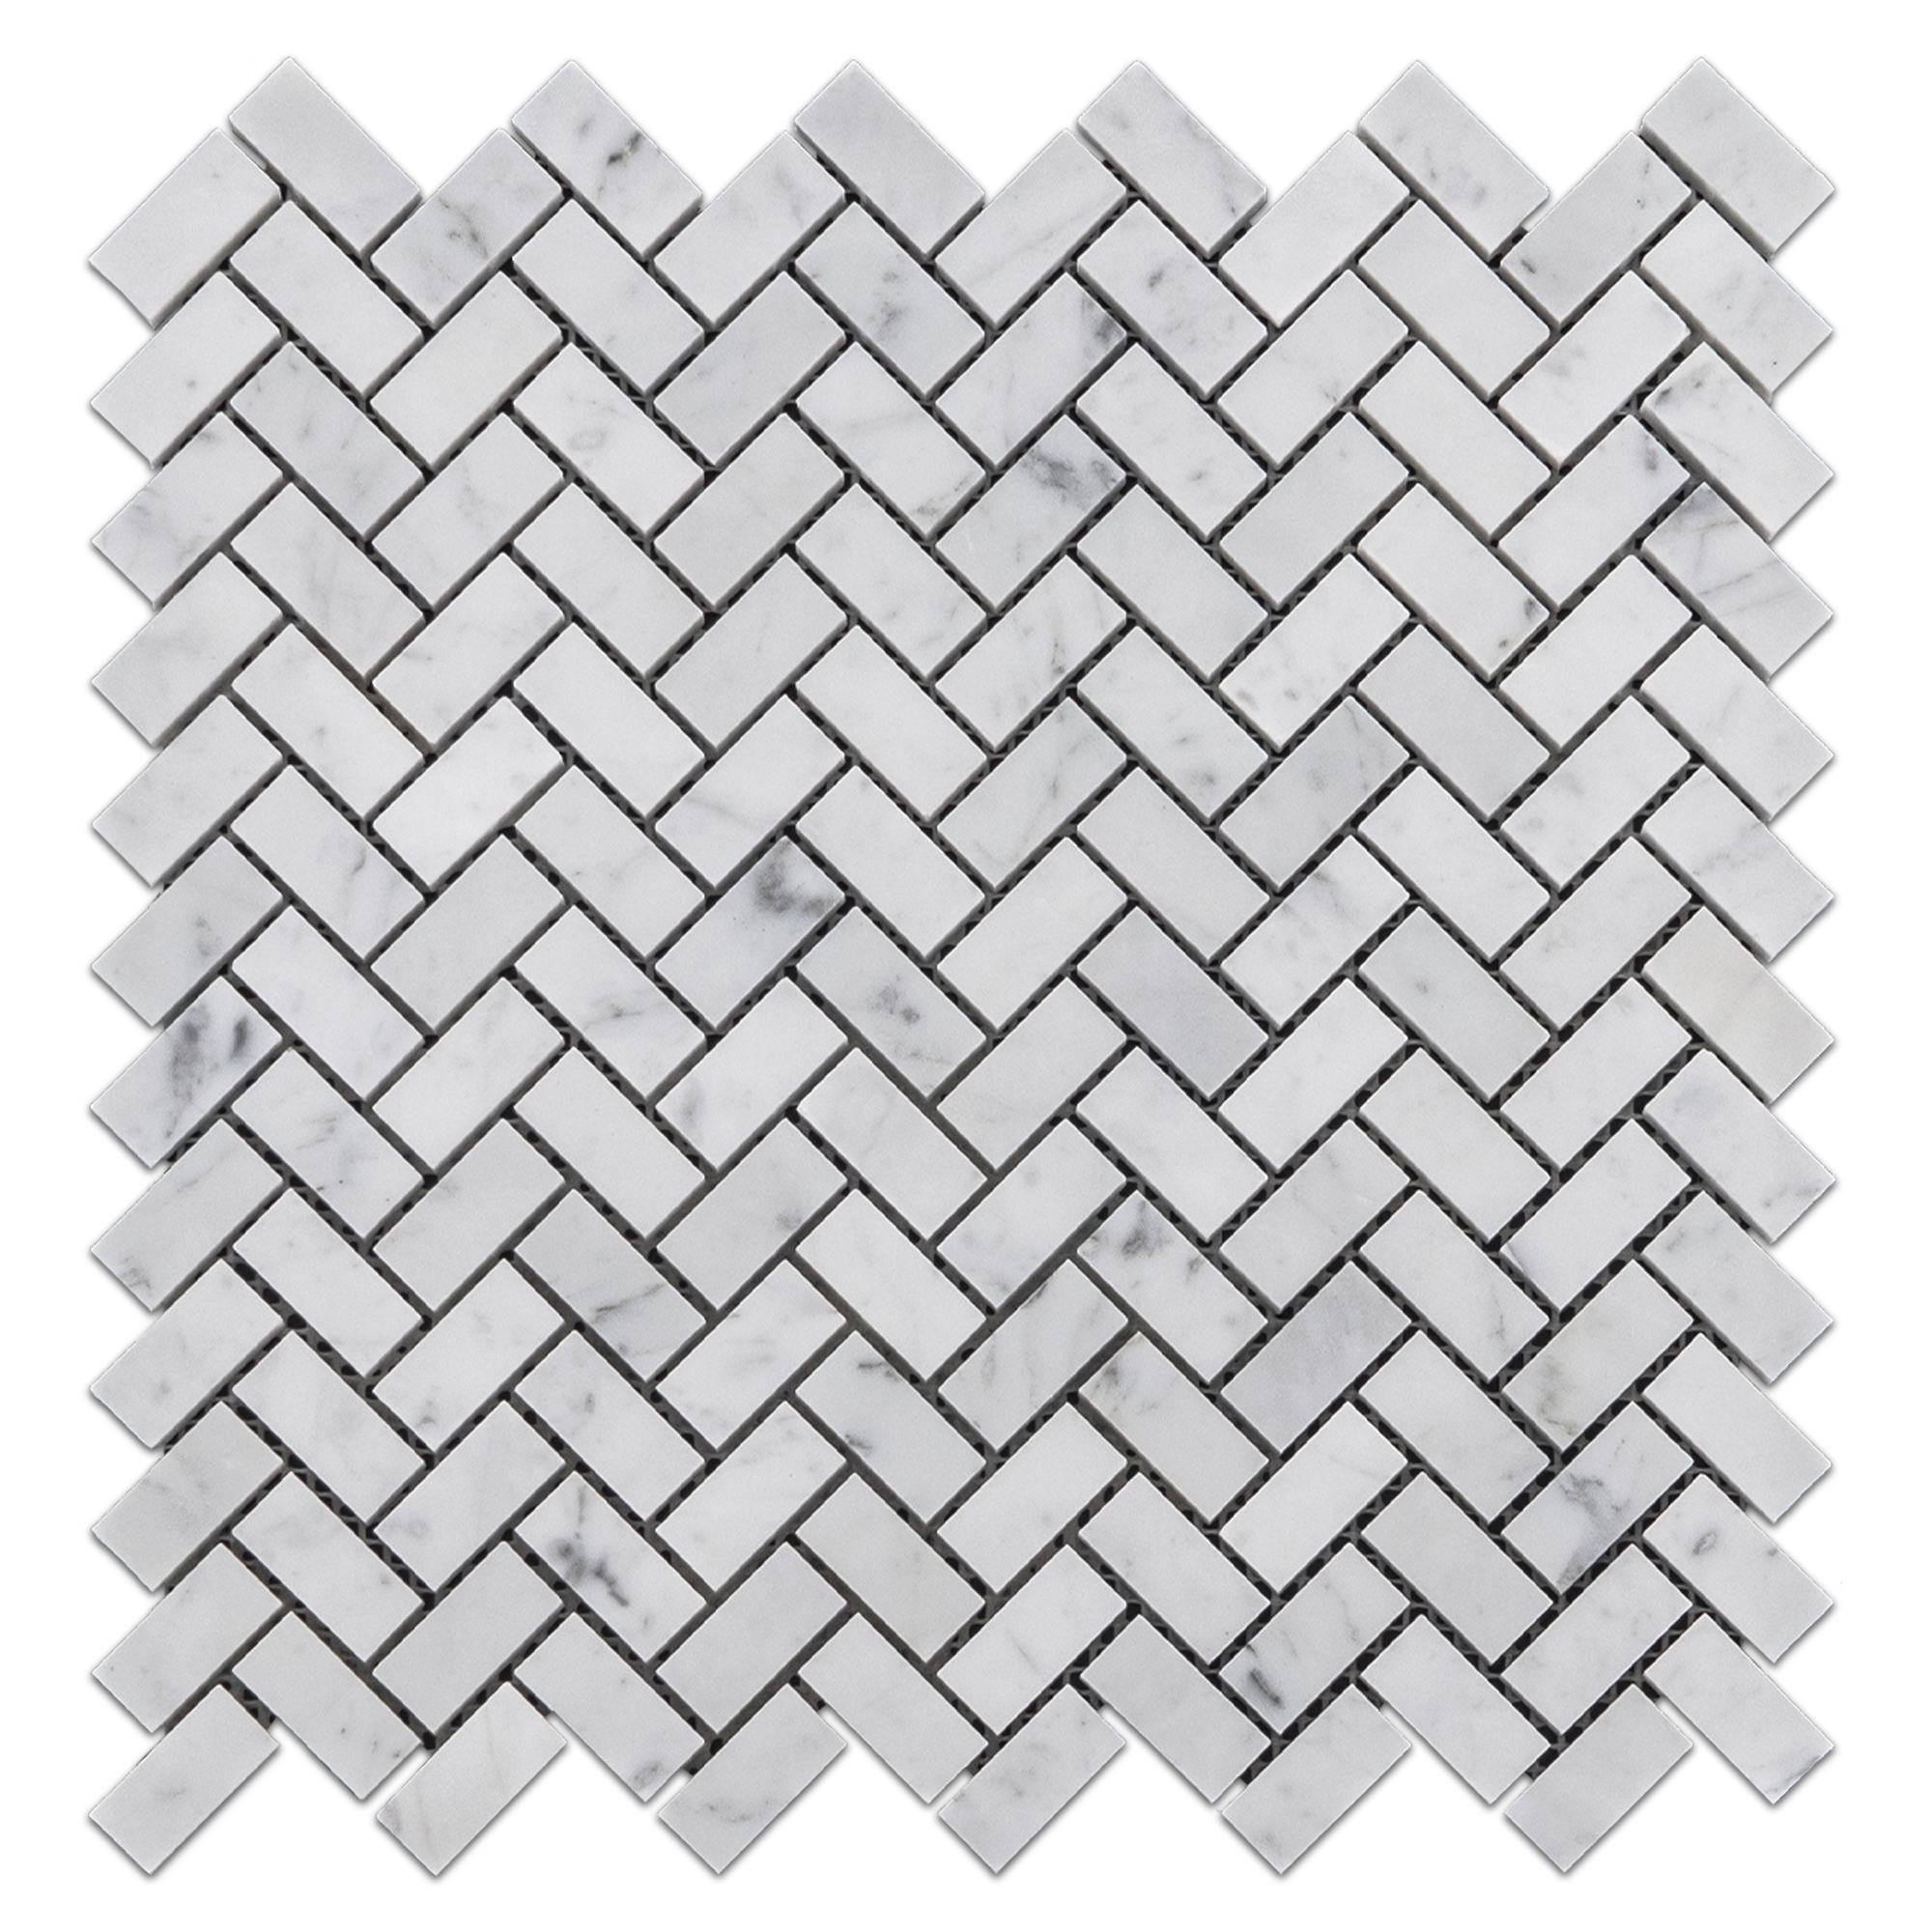 Alt text: "Elon Bianco Carrara marble herringbone field mosaic tile, 11.25x11.25x0.375 inches, polished finish, by Surface Group International."